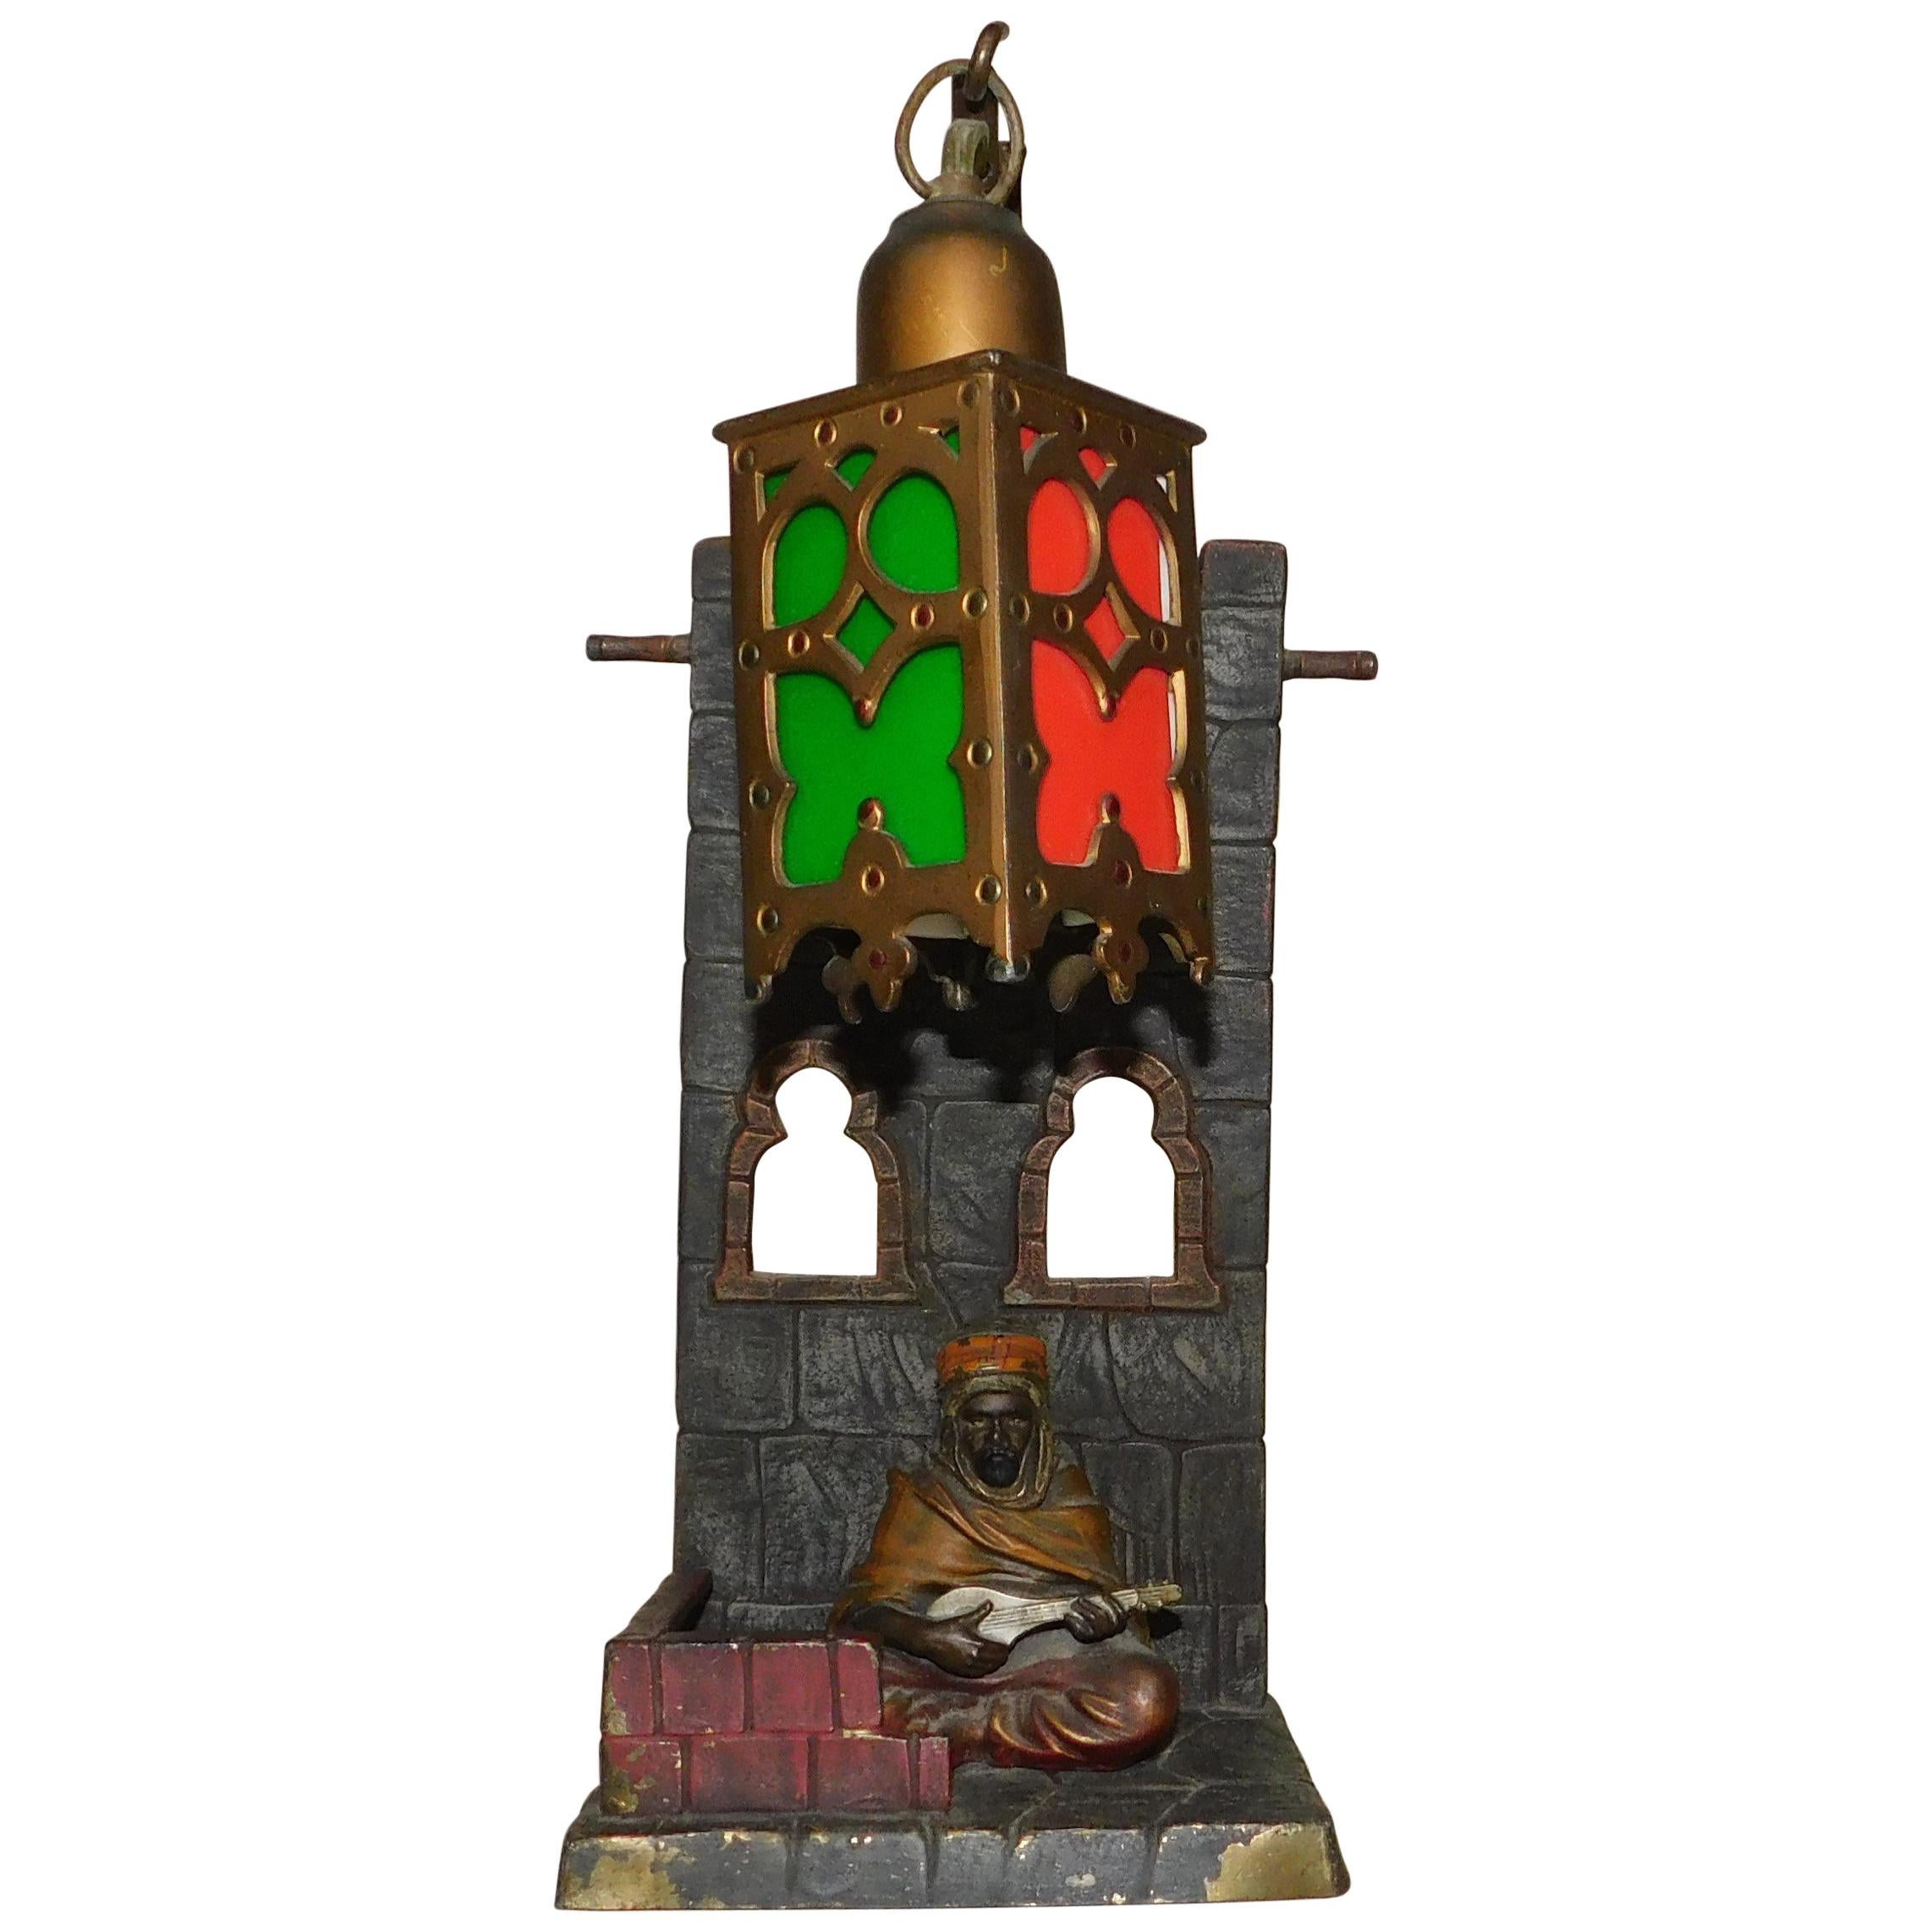 Lampe de joueur de luth arabe viennoise en bronze de style Bergman